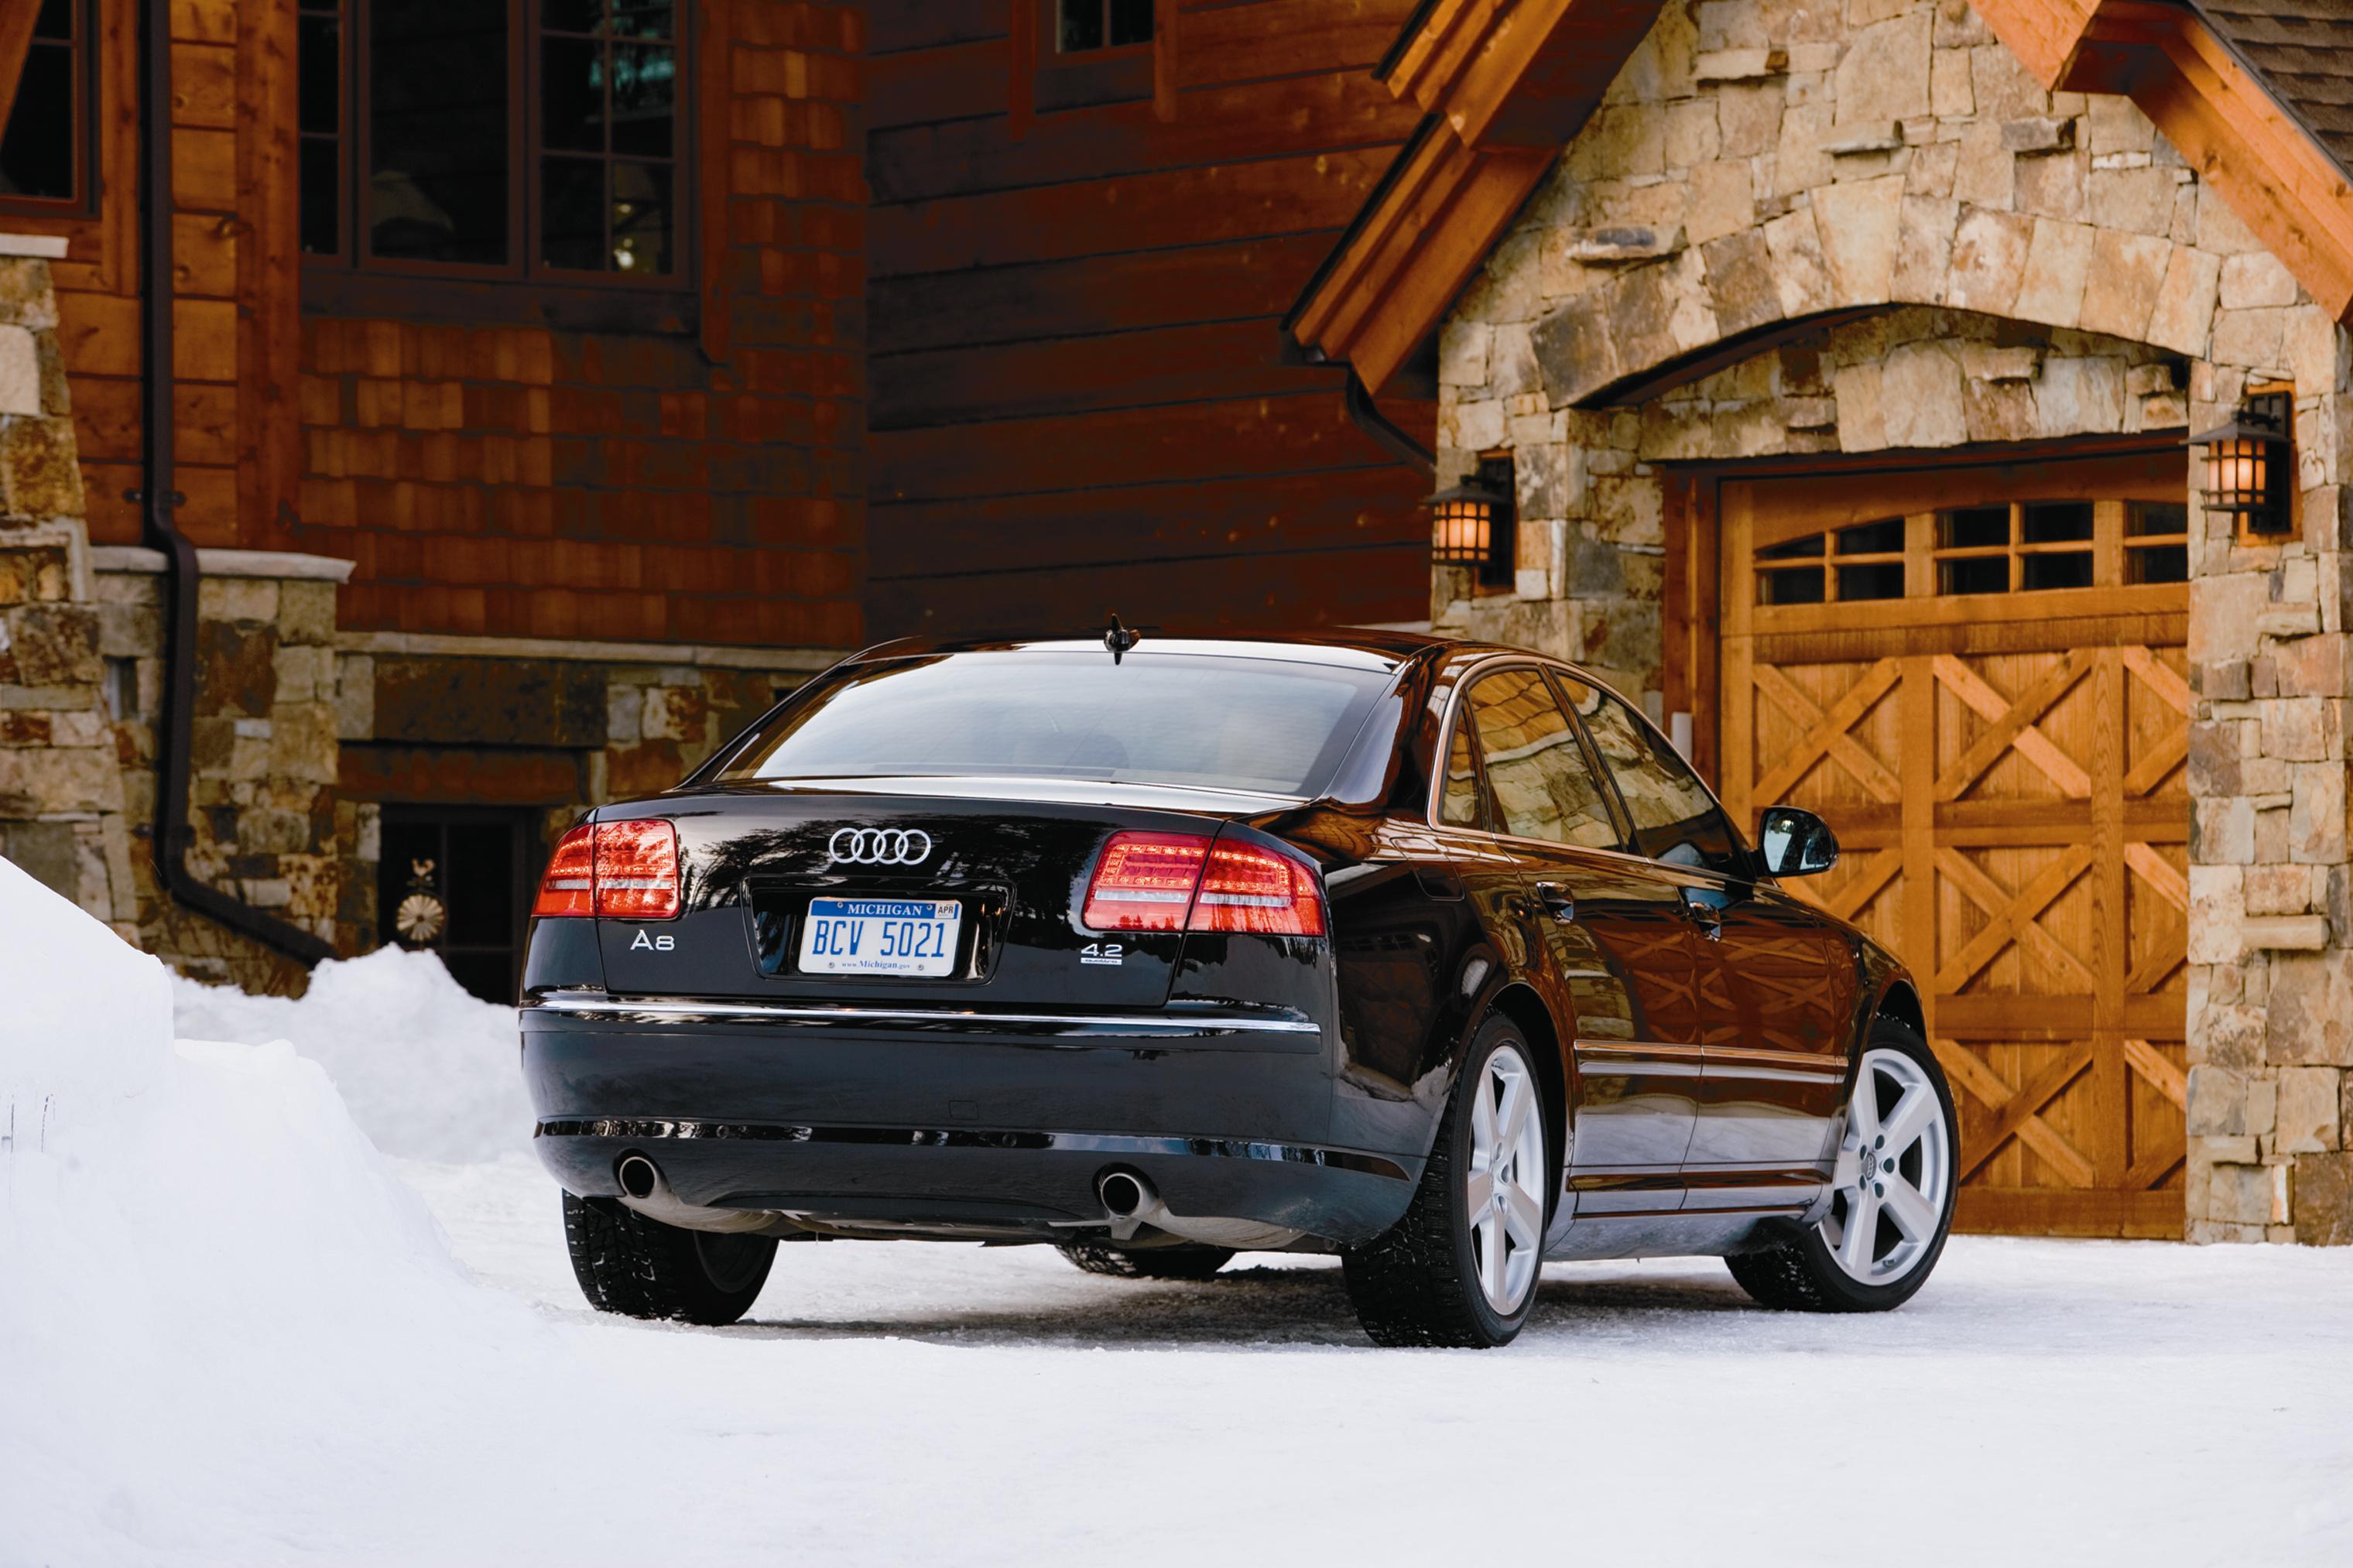 Audi A8 4.2